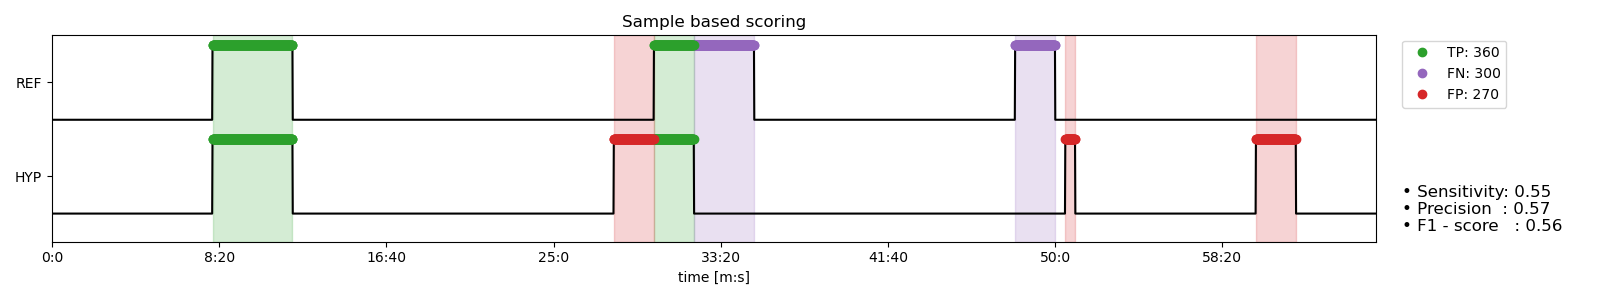 Illustration of sample based scoring.